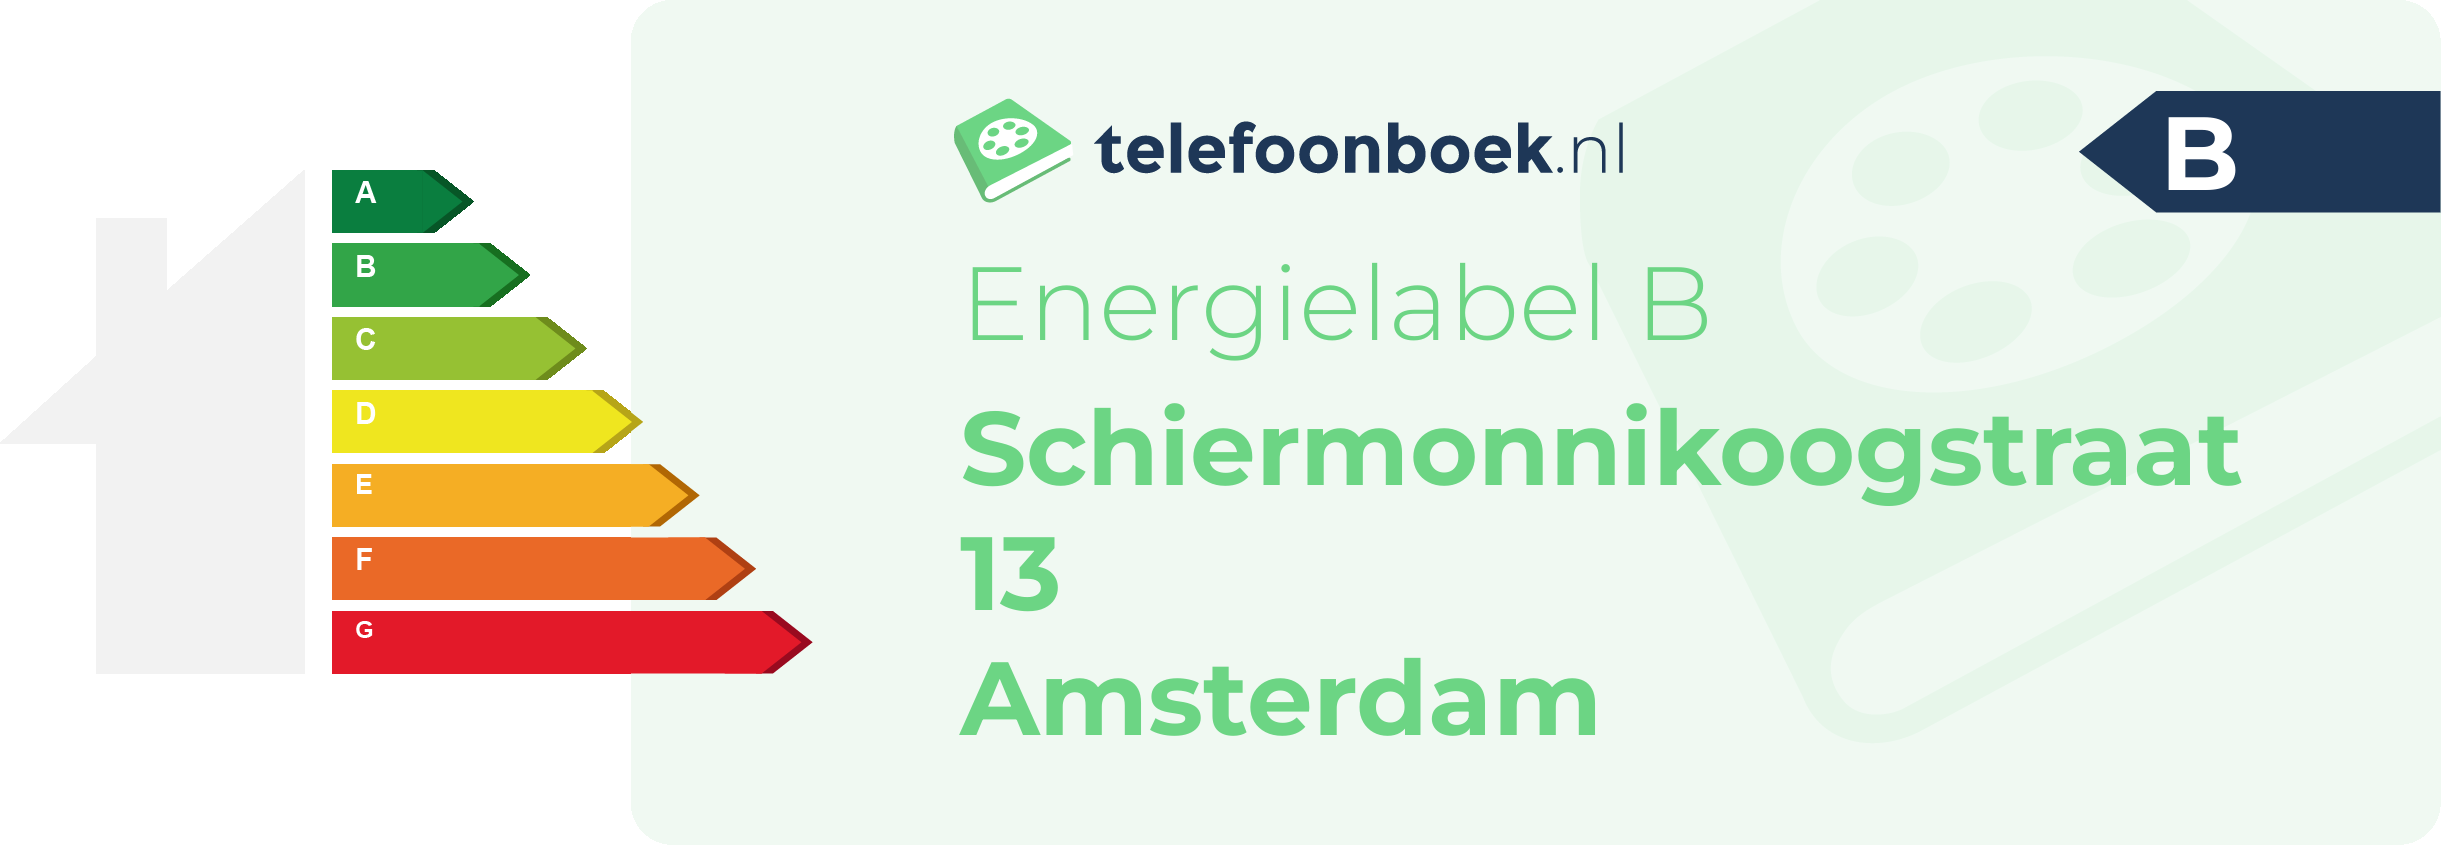 Energielabel Schiermonnikoogstraat 13 Amsterdam